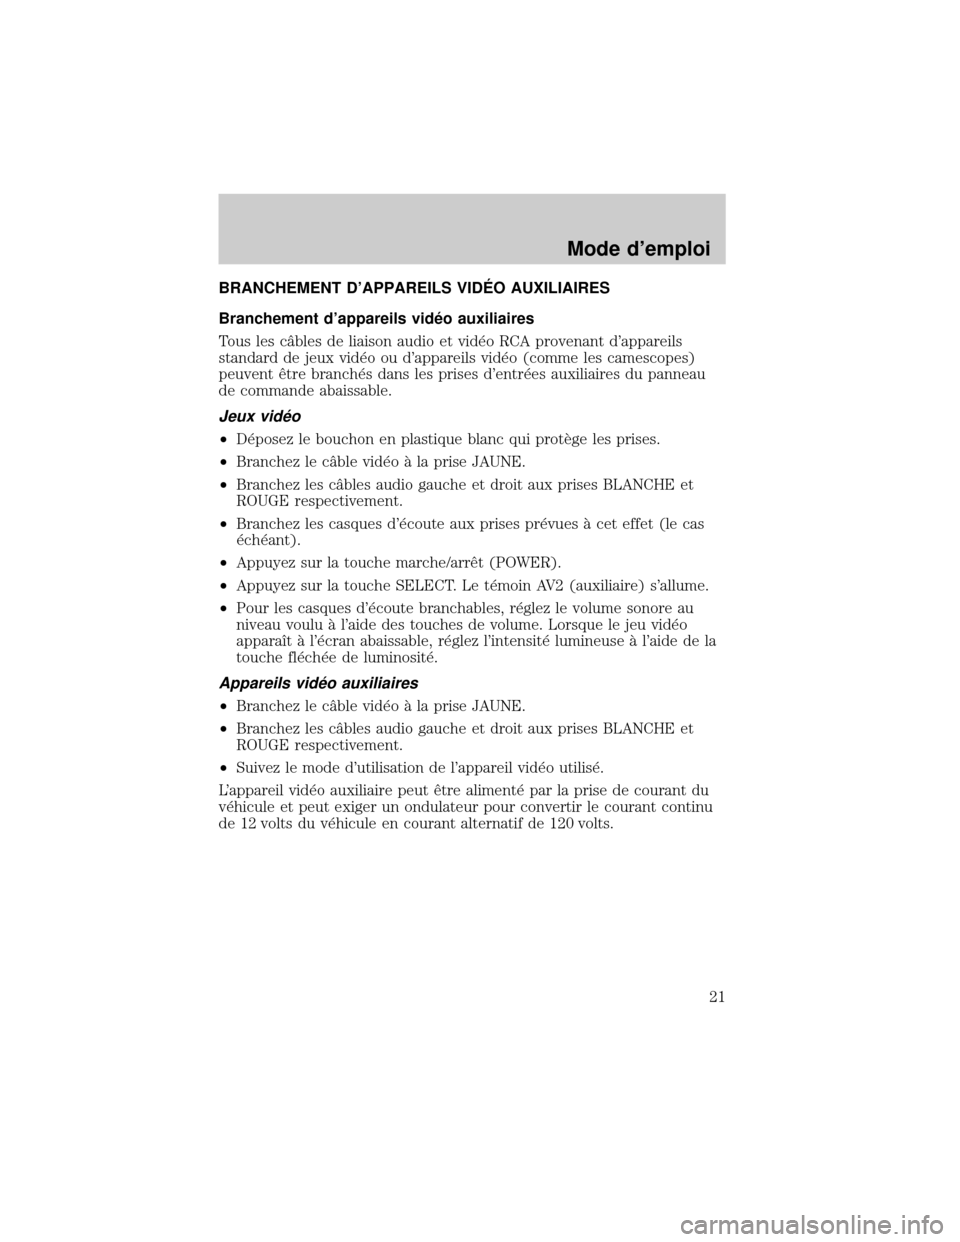 FORD EXPEDITION 2000 1.G Rear Seat Entertainment System Manual BRANCHEMENT DAPPAREILS VIDˆO AUXILIAIRES
Branchement dappareils vid×o auxiliaires
Tous les cÑbles de liaison audio et vid×o RCA provenant dappareils
standard de jeux vid×o ou dappareils vid×